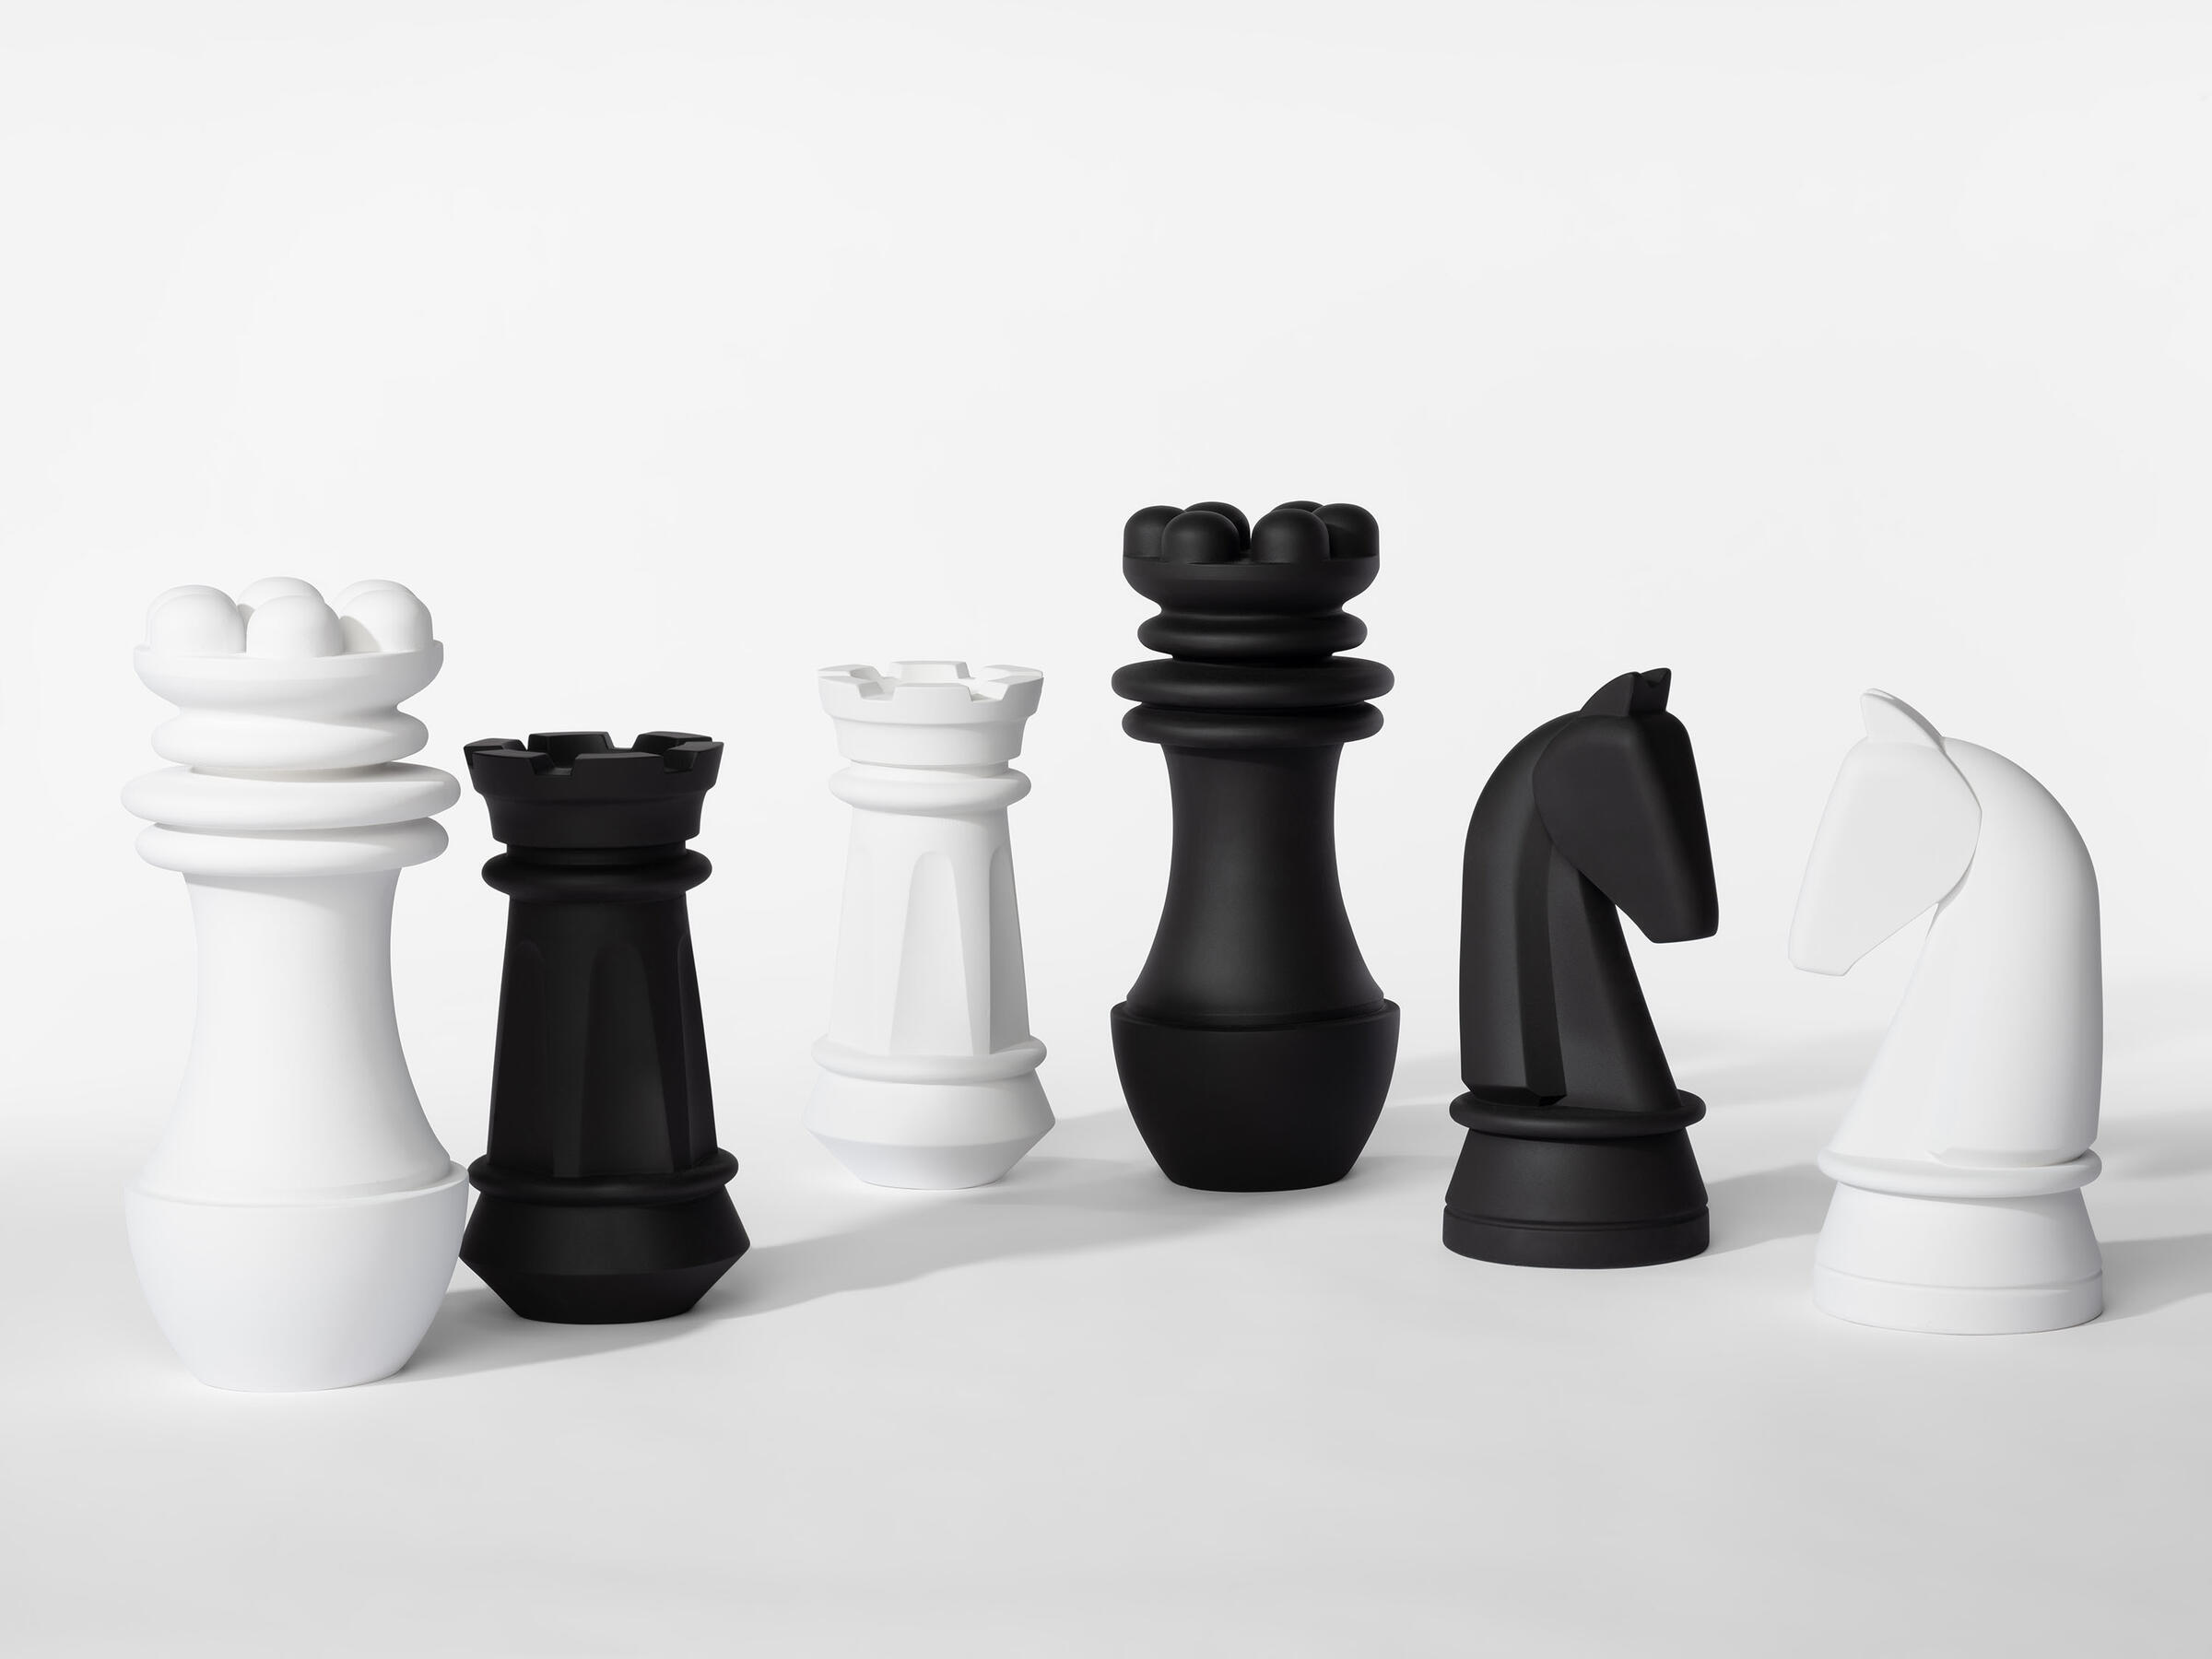 fancy black queen chess pieces